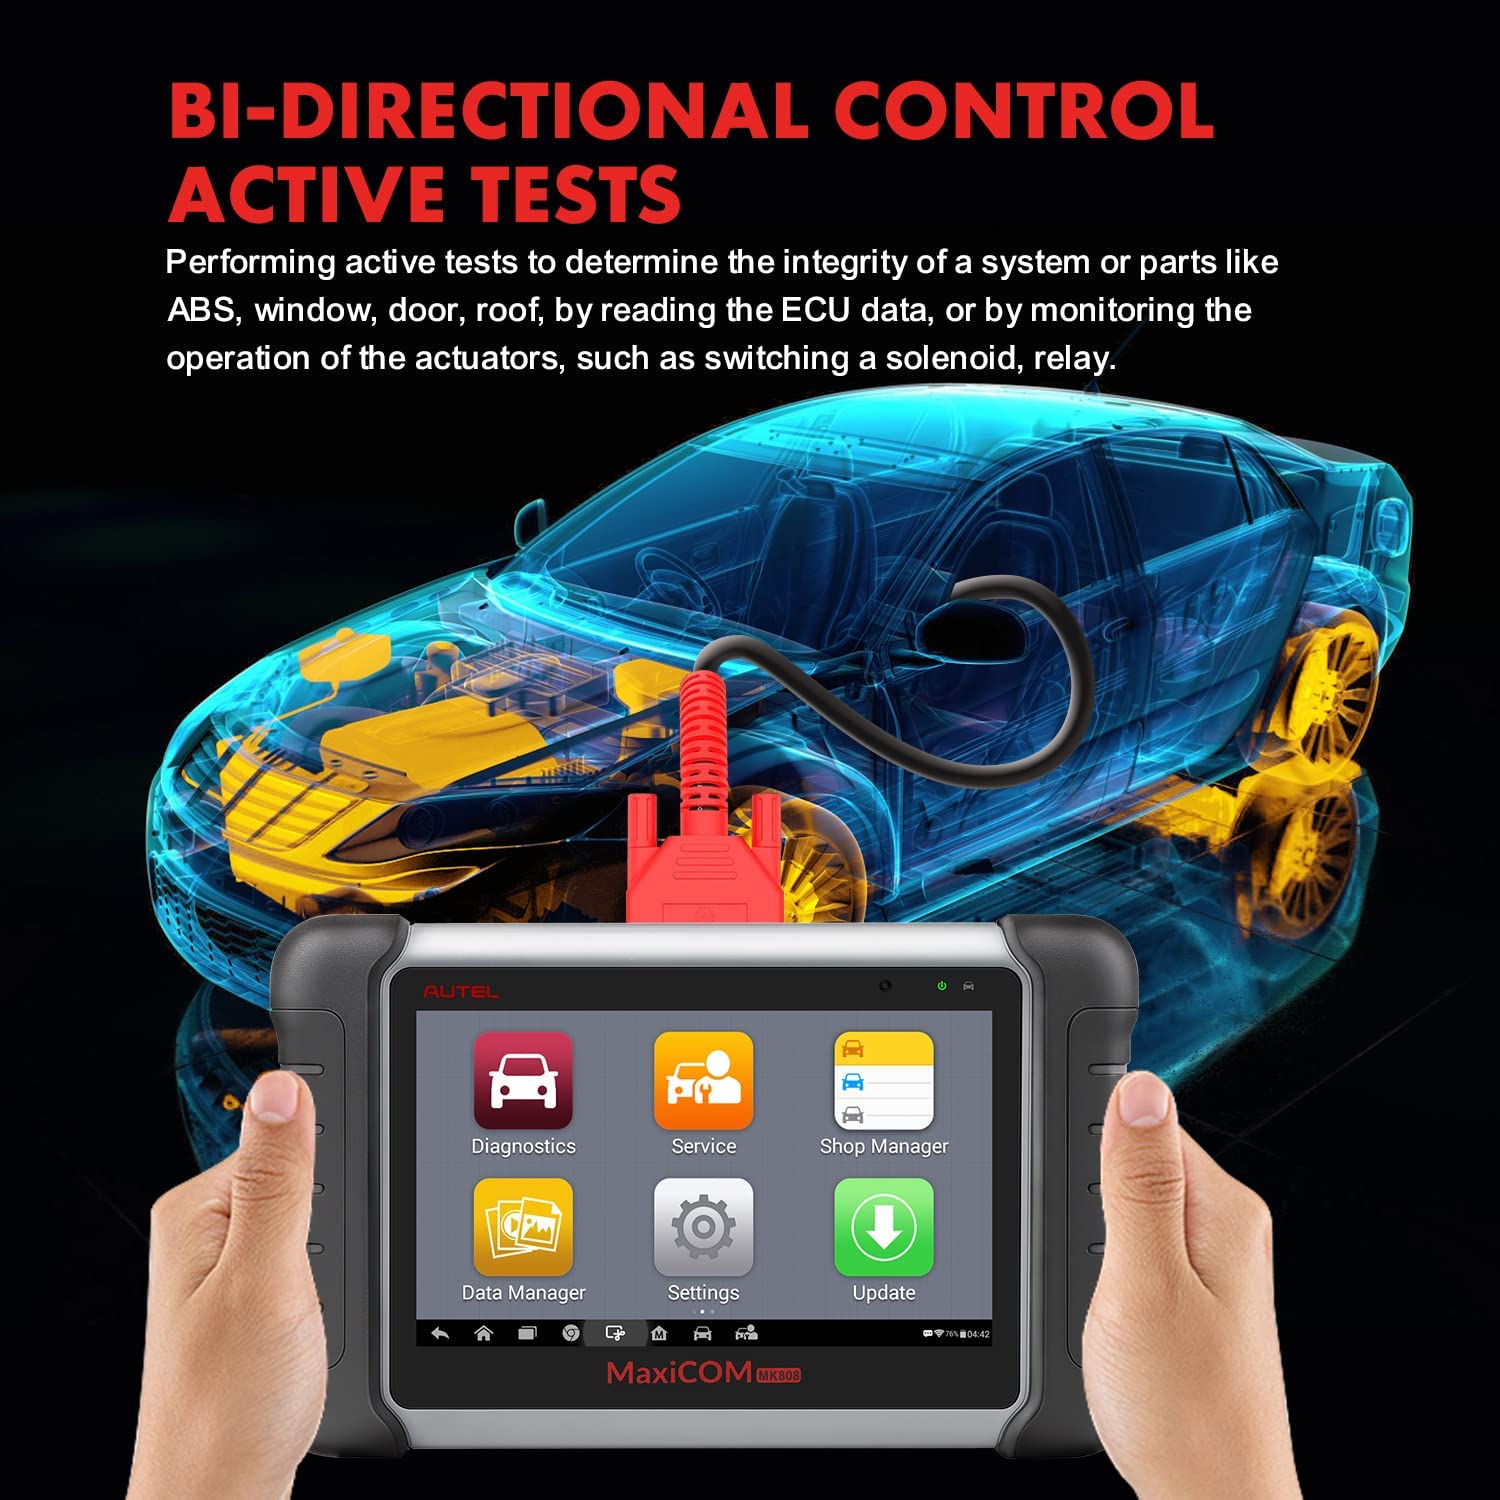 Autel MaxiDAS DS808K come with Bi-directional control function